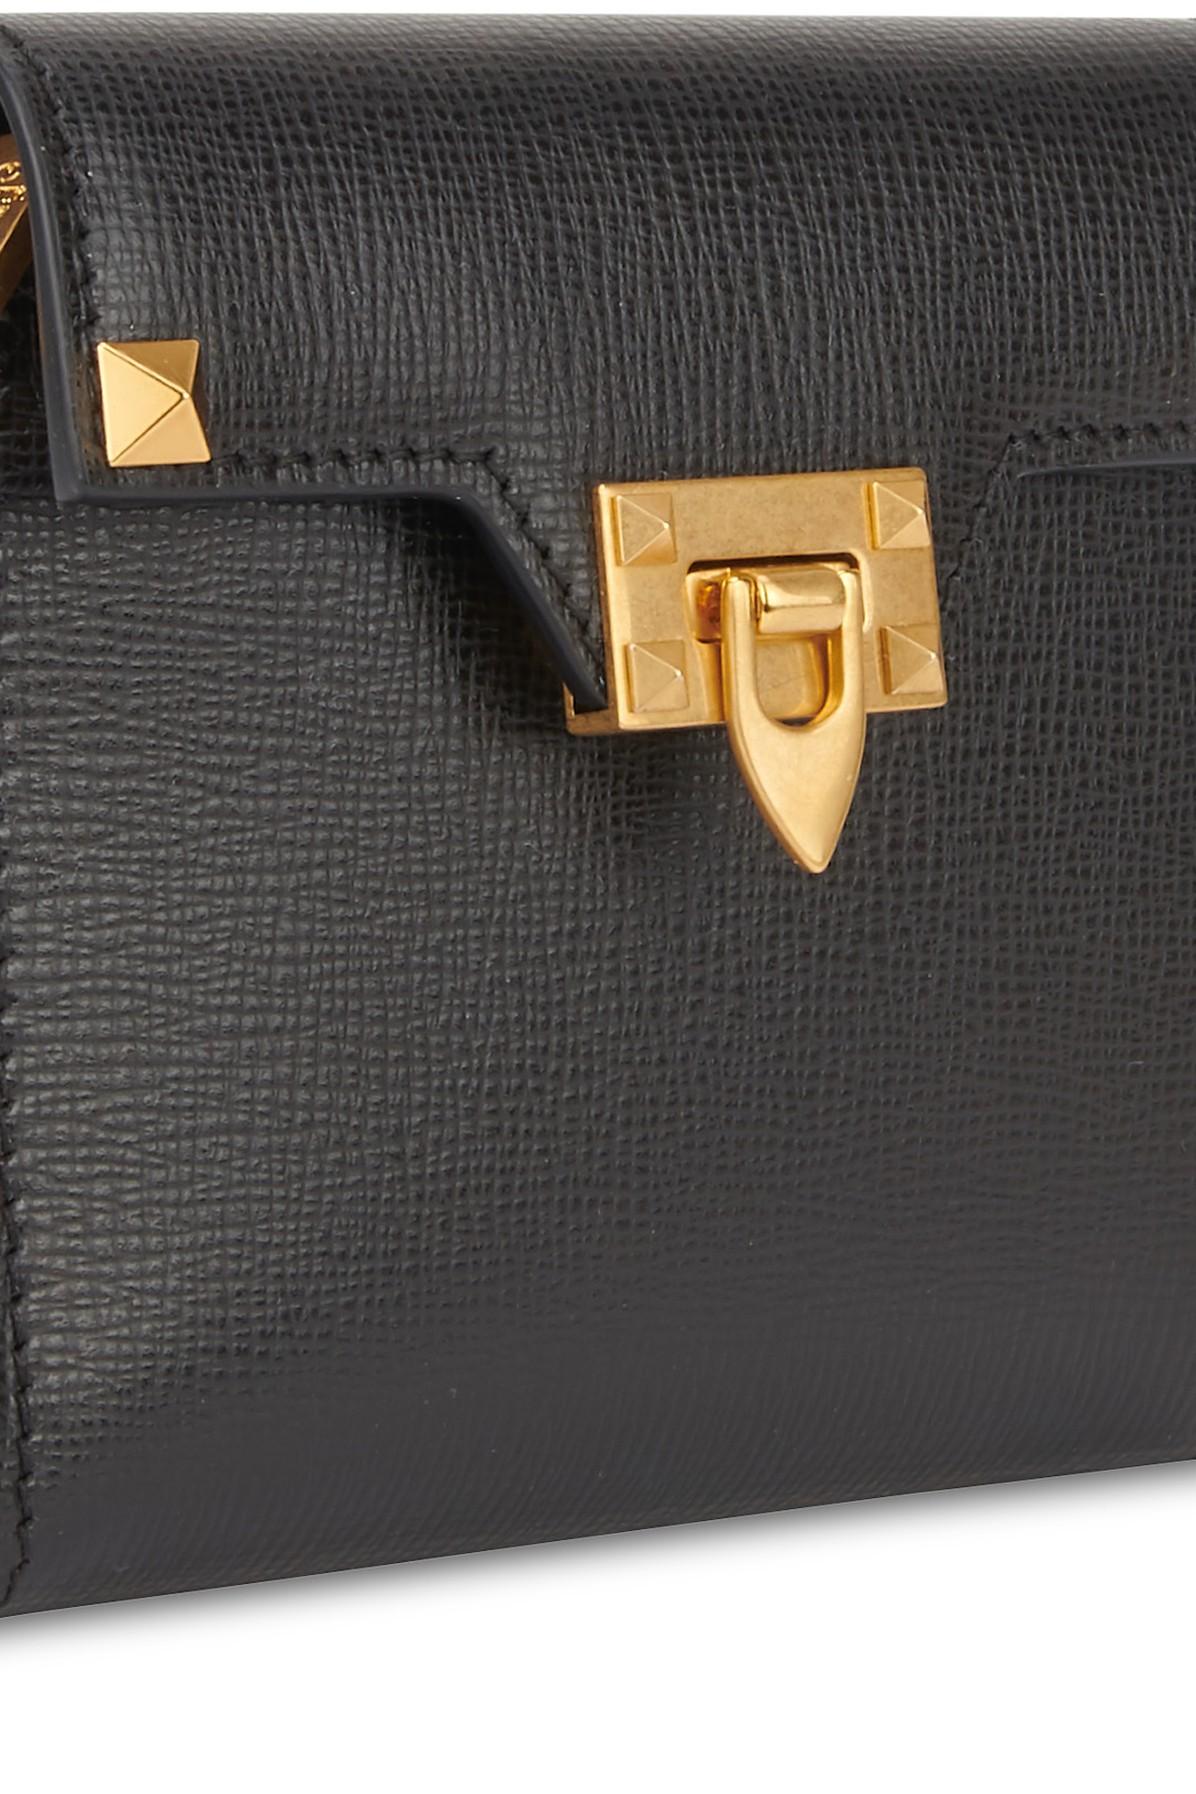 Valentino Leather Rockstud Alcove Wallet in Nero (Black) - Lyst